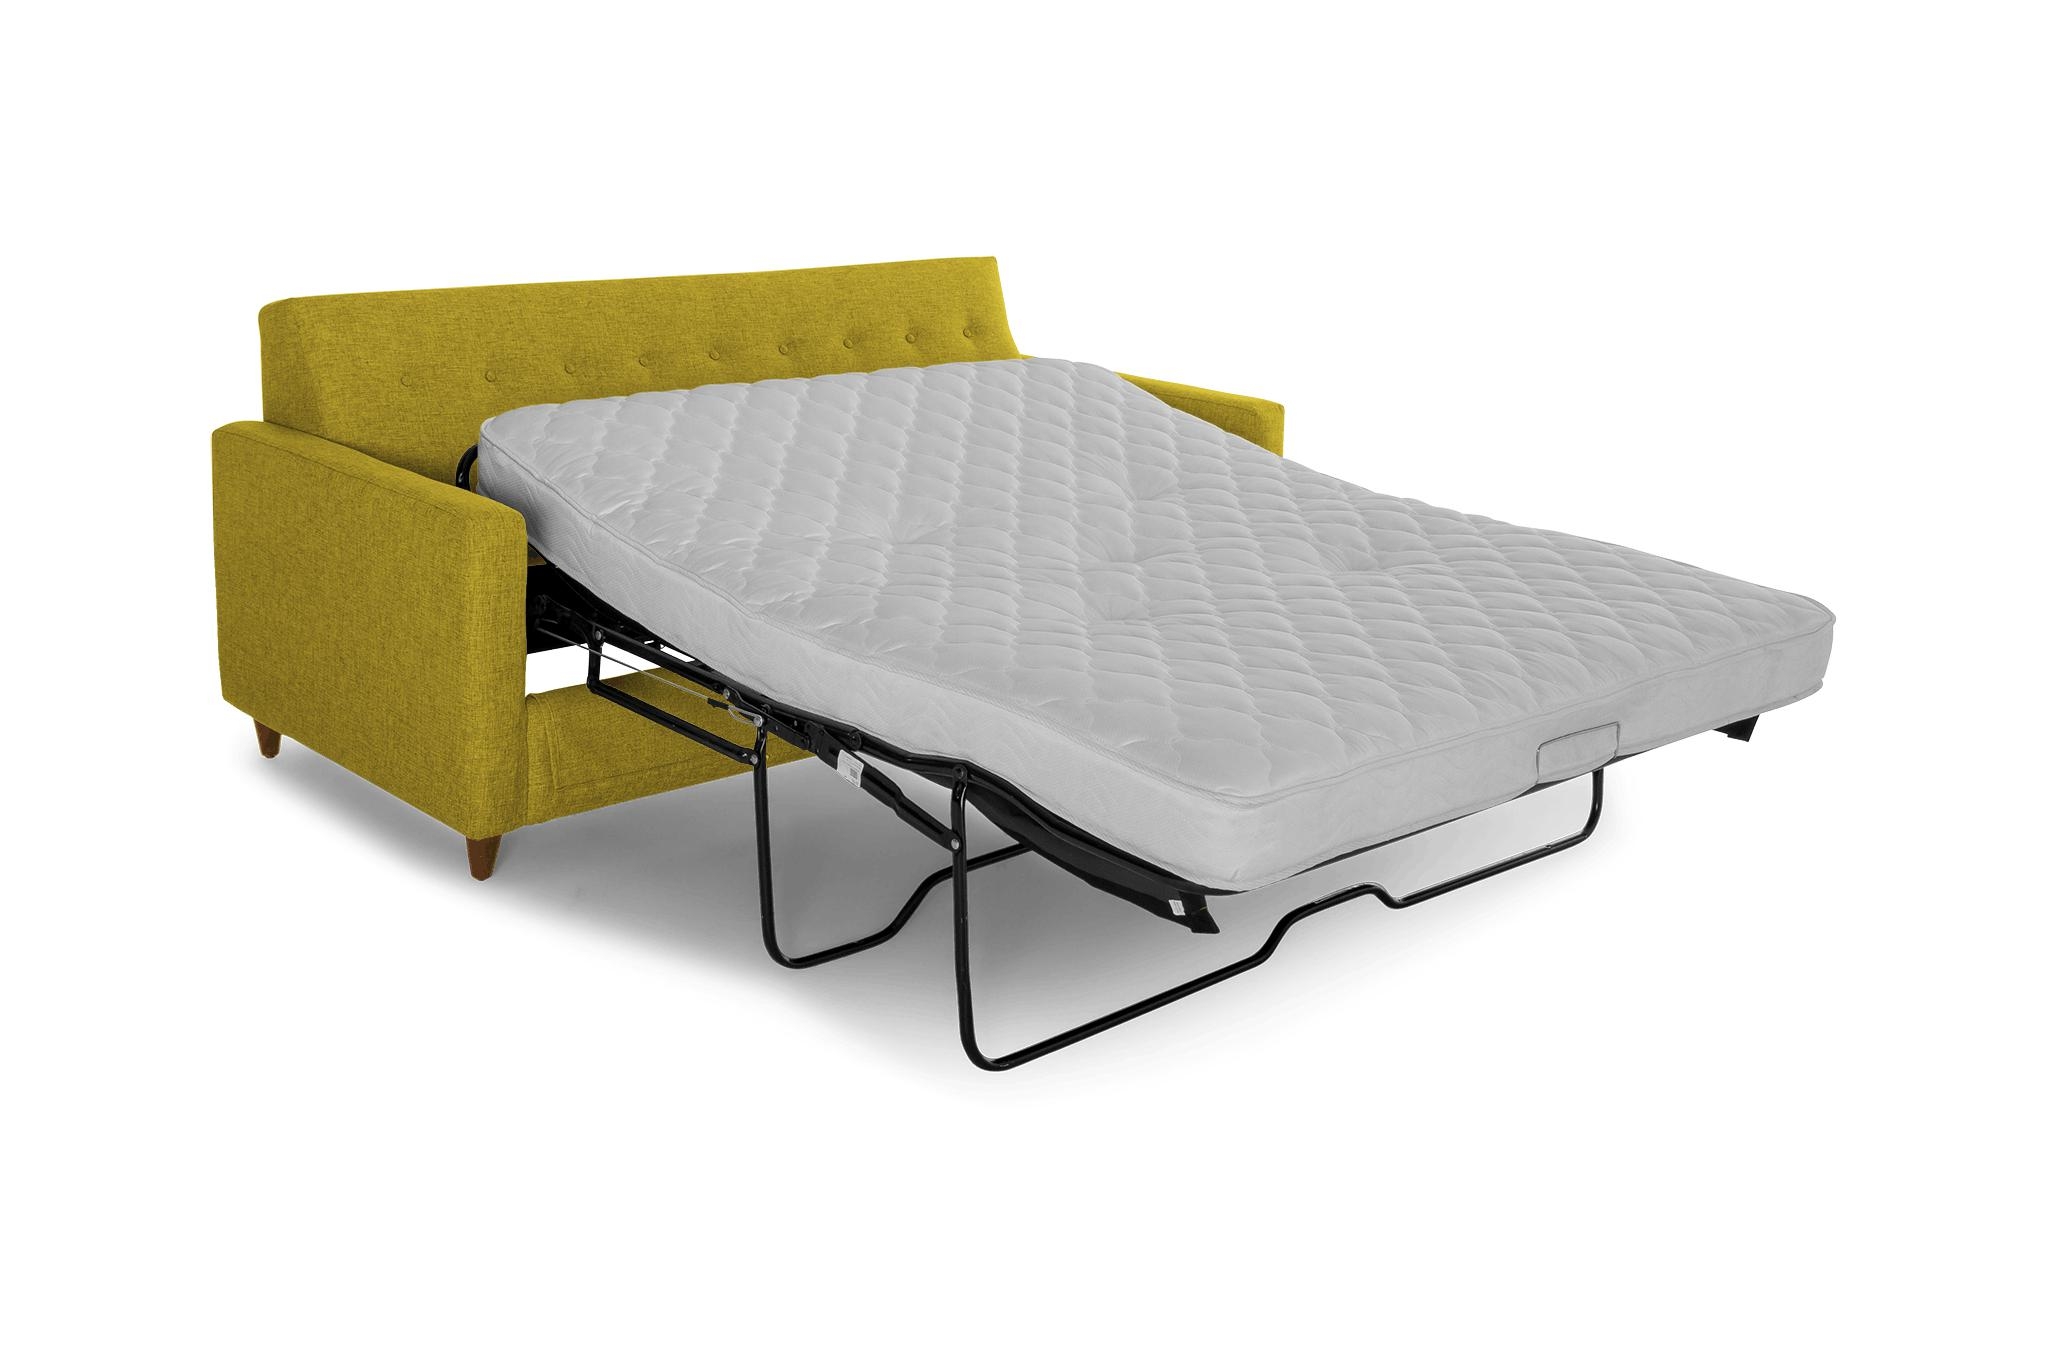 Yellow Korver Mid Century Modern Sleeper Sofa - Bloke Goldenrod - Mocha - Image 1